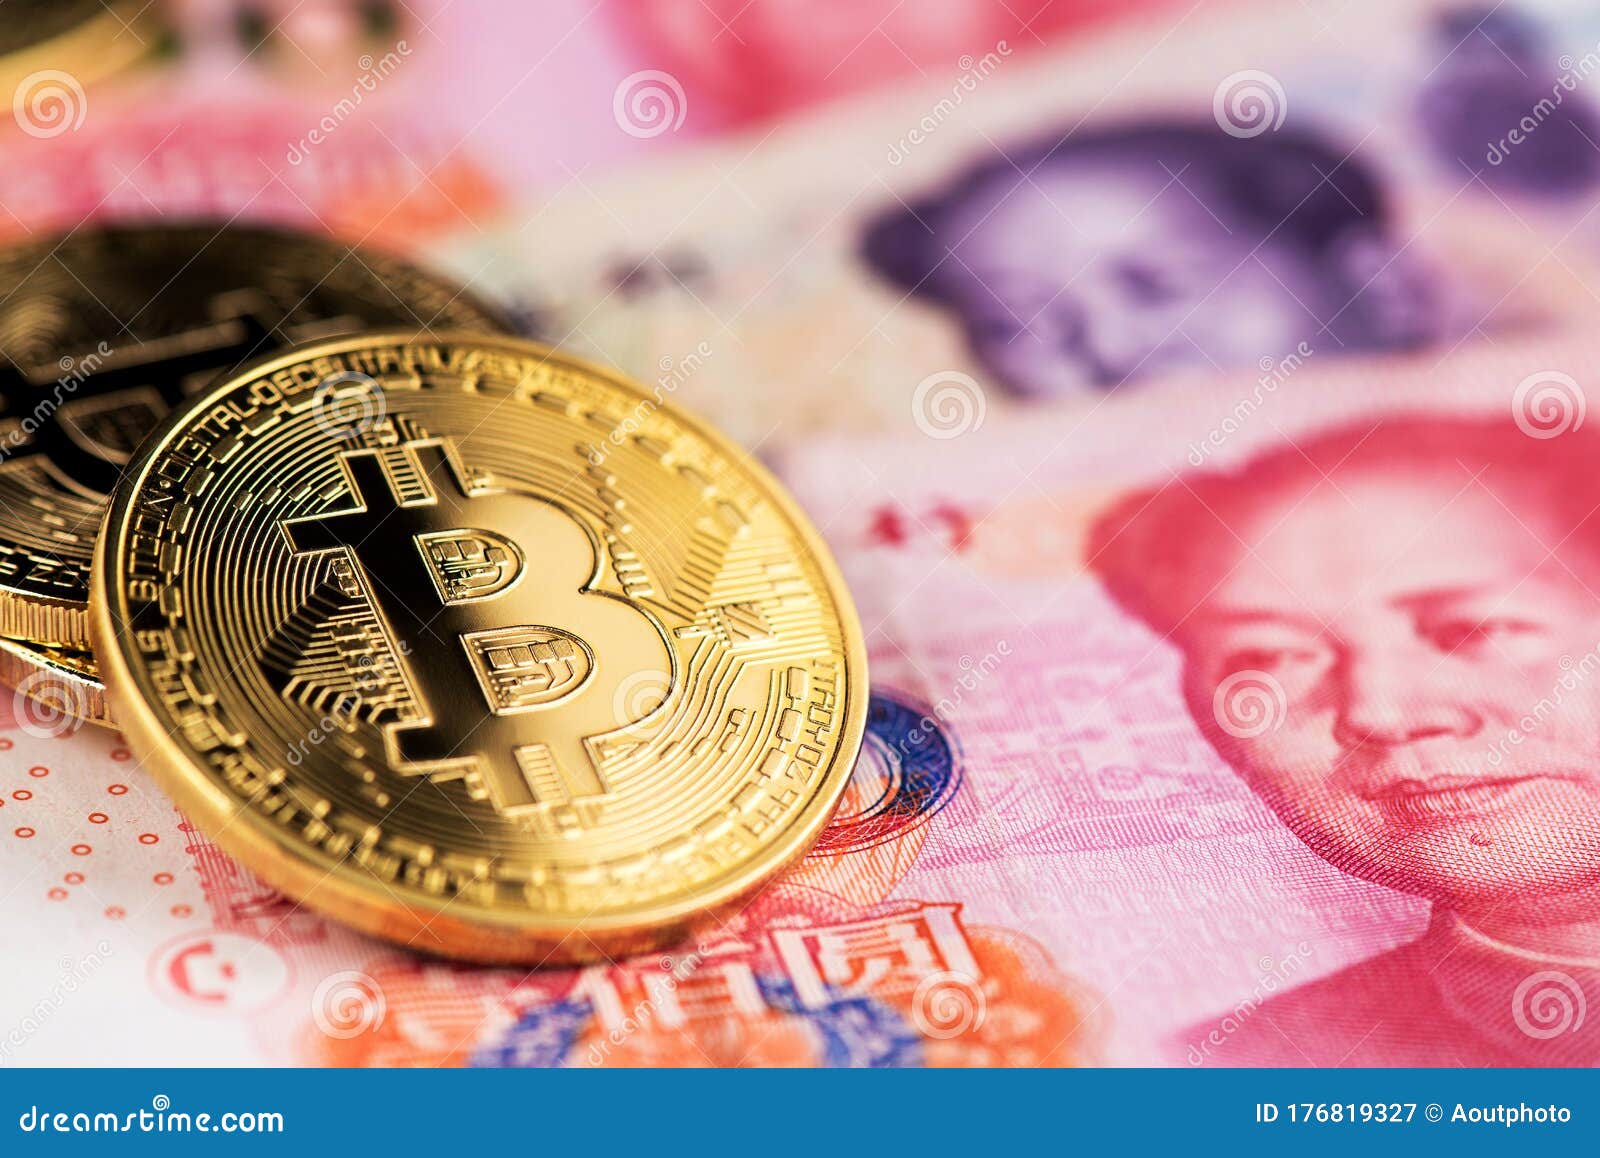 renminbi bitcoin prekybos apimtis)